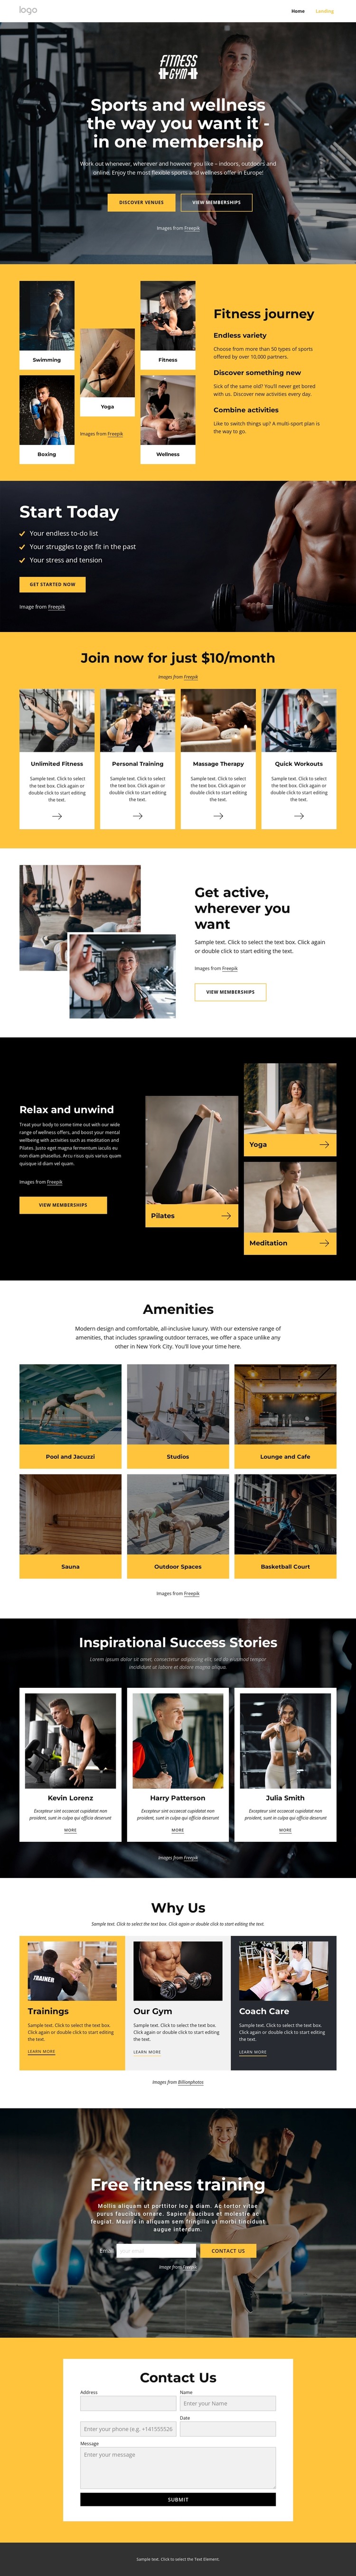 Gym, swimming, fitness classes Web Design